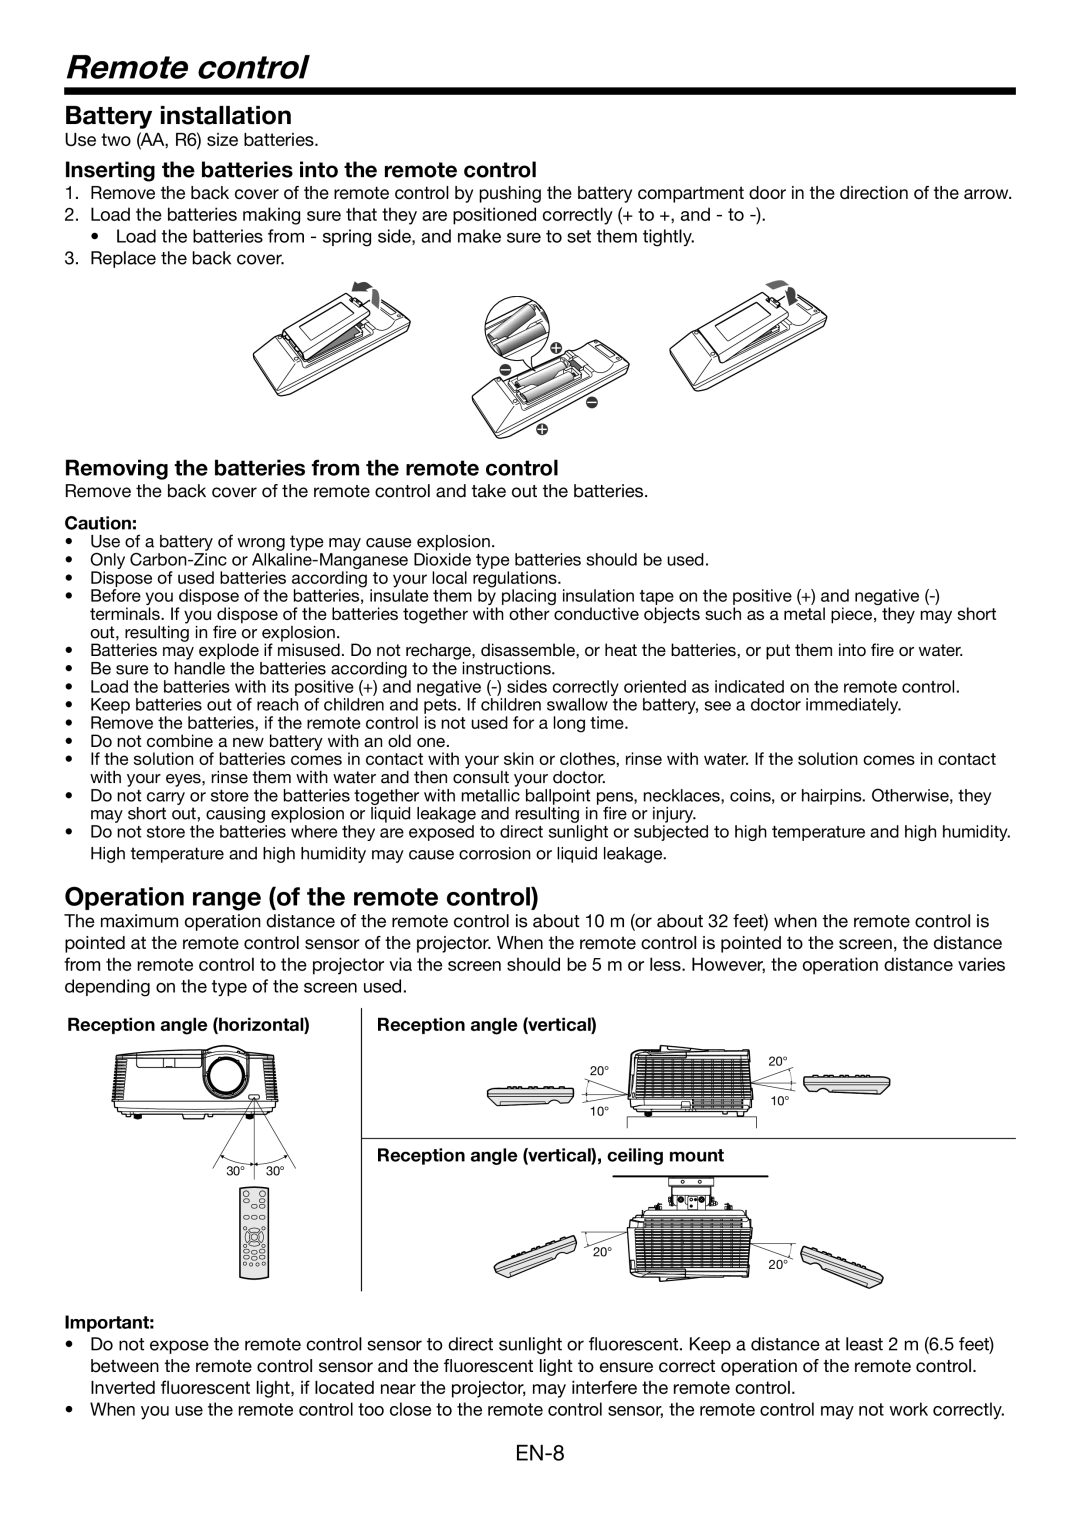 Mitsubishi Electronics FD730U-G Remote control, Battery installation, Operation range of the remote control, EN-8 